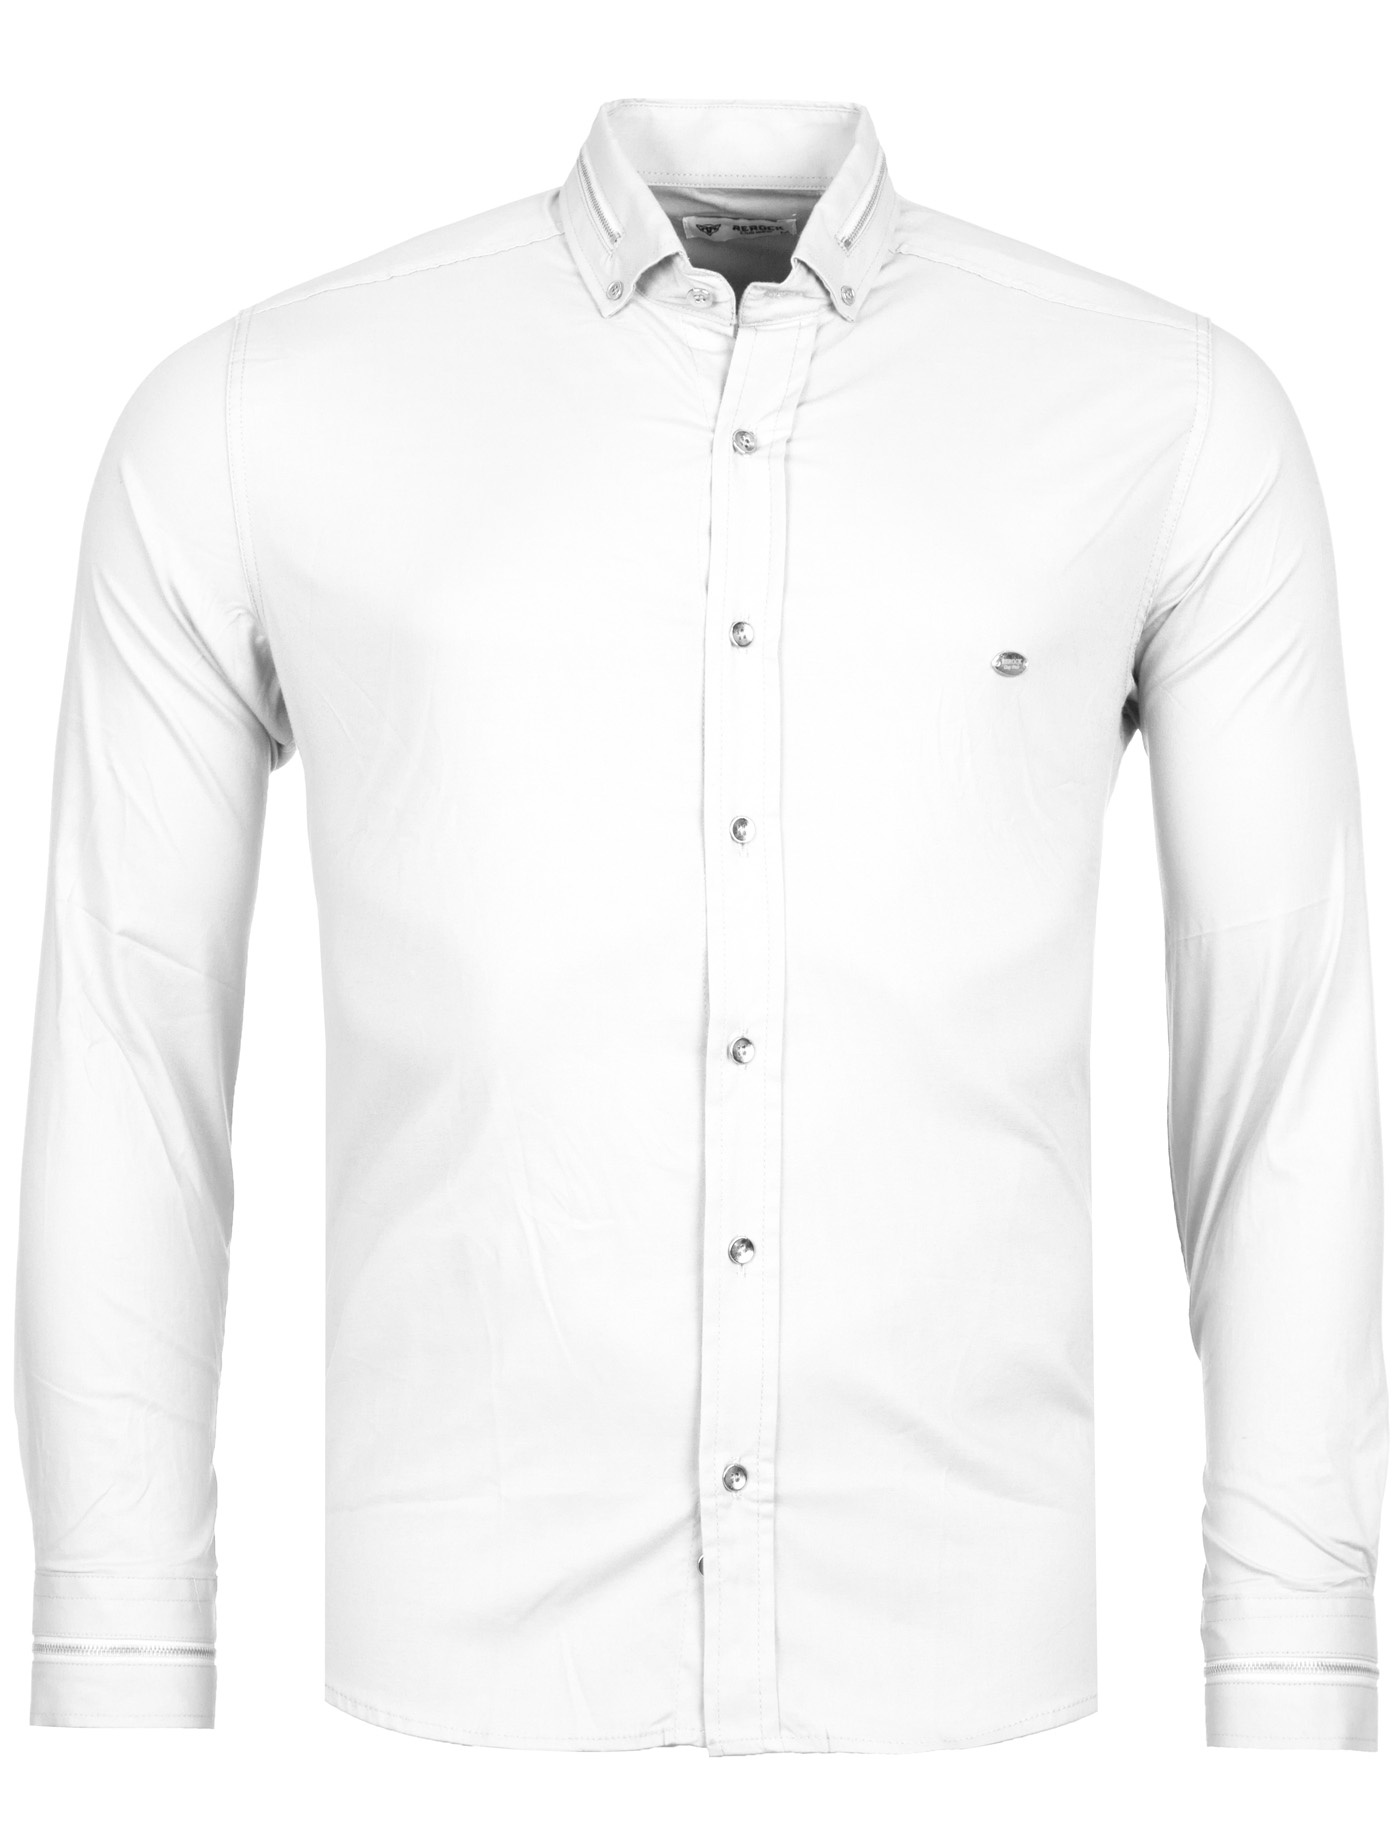 Overhemd wit